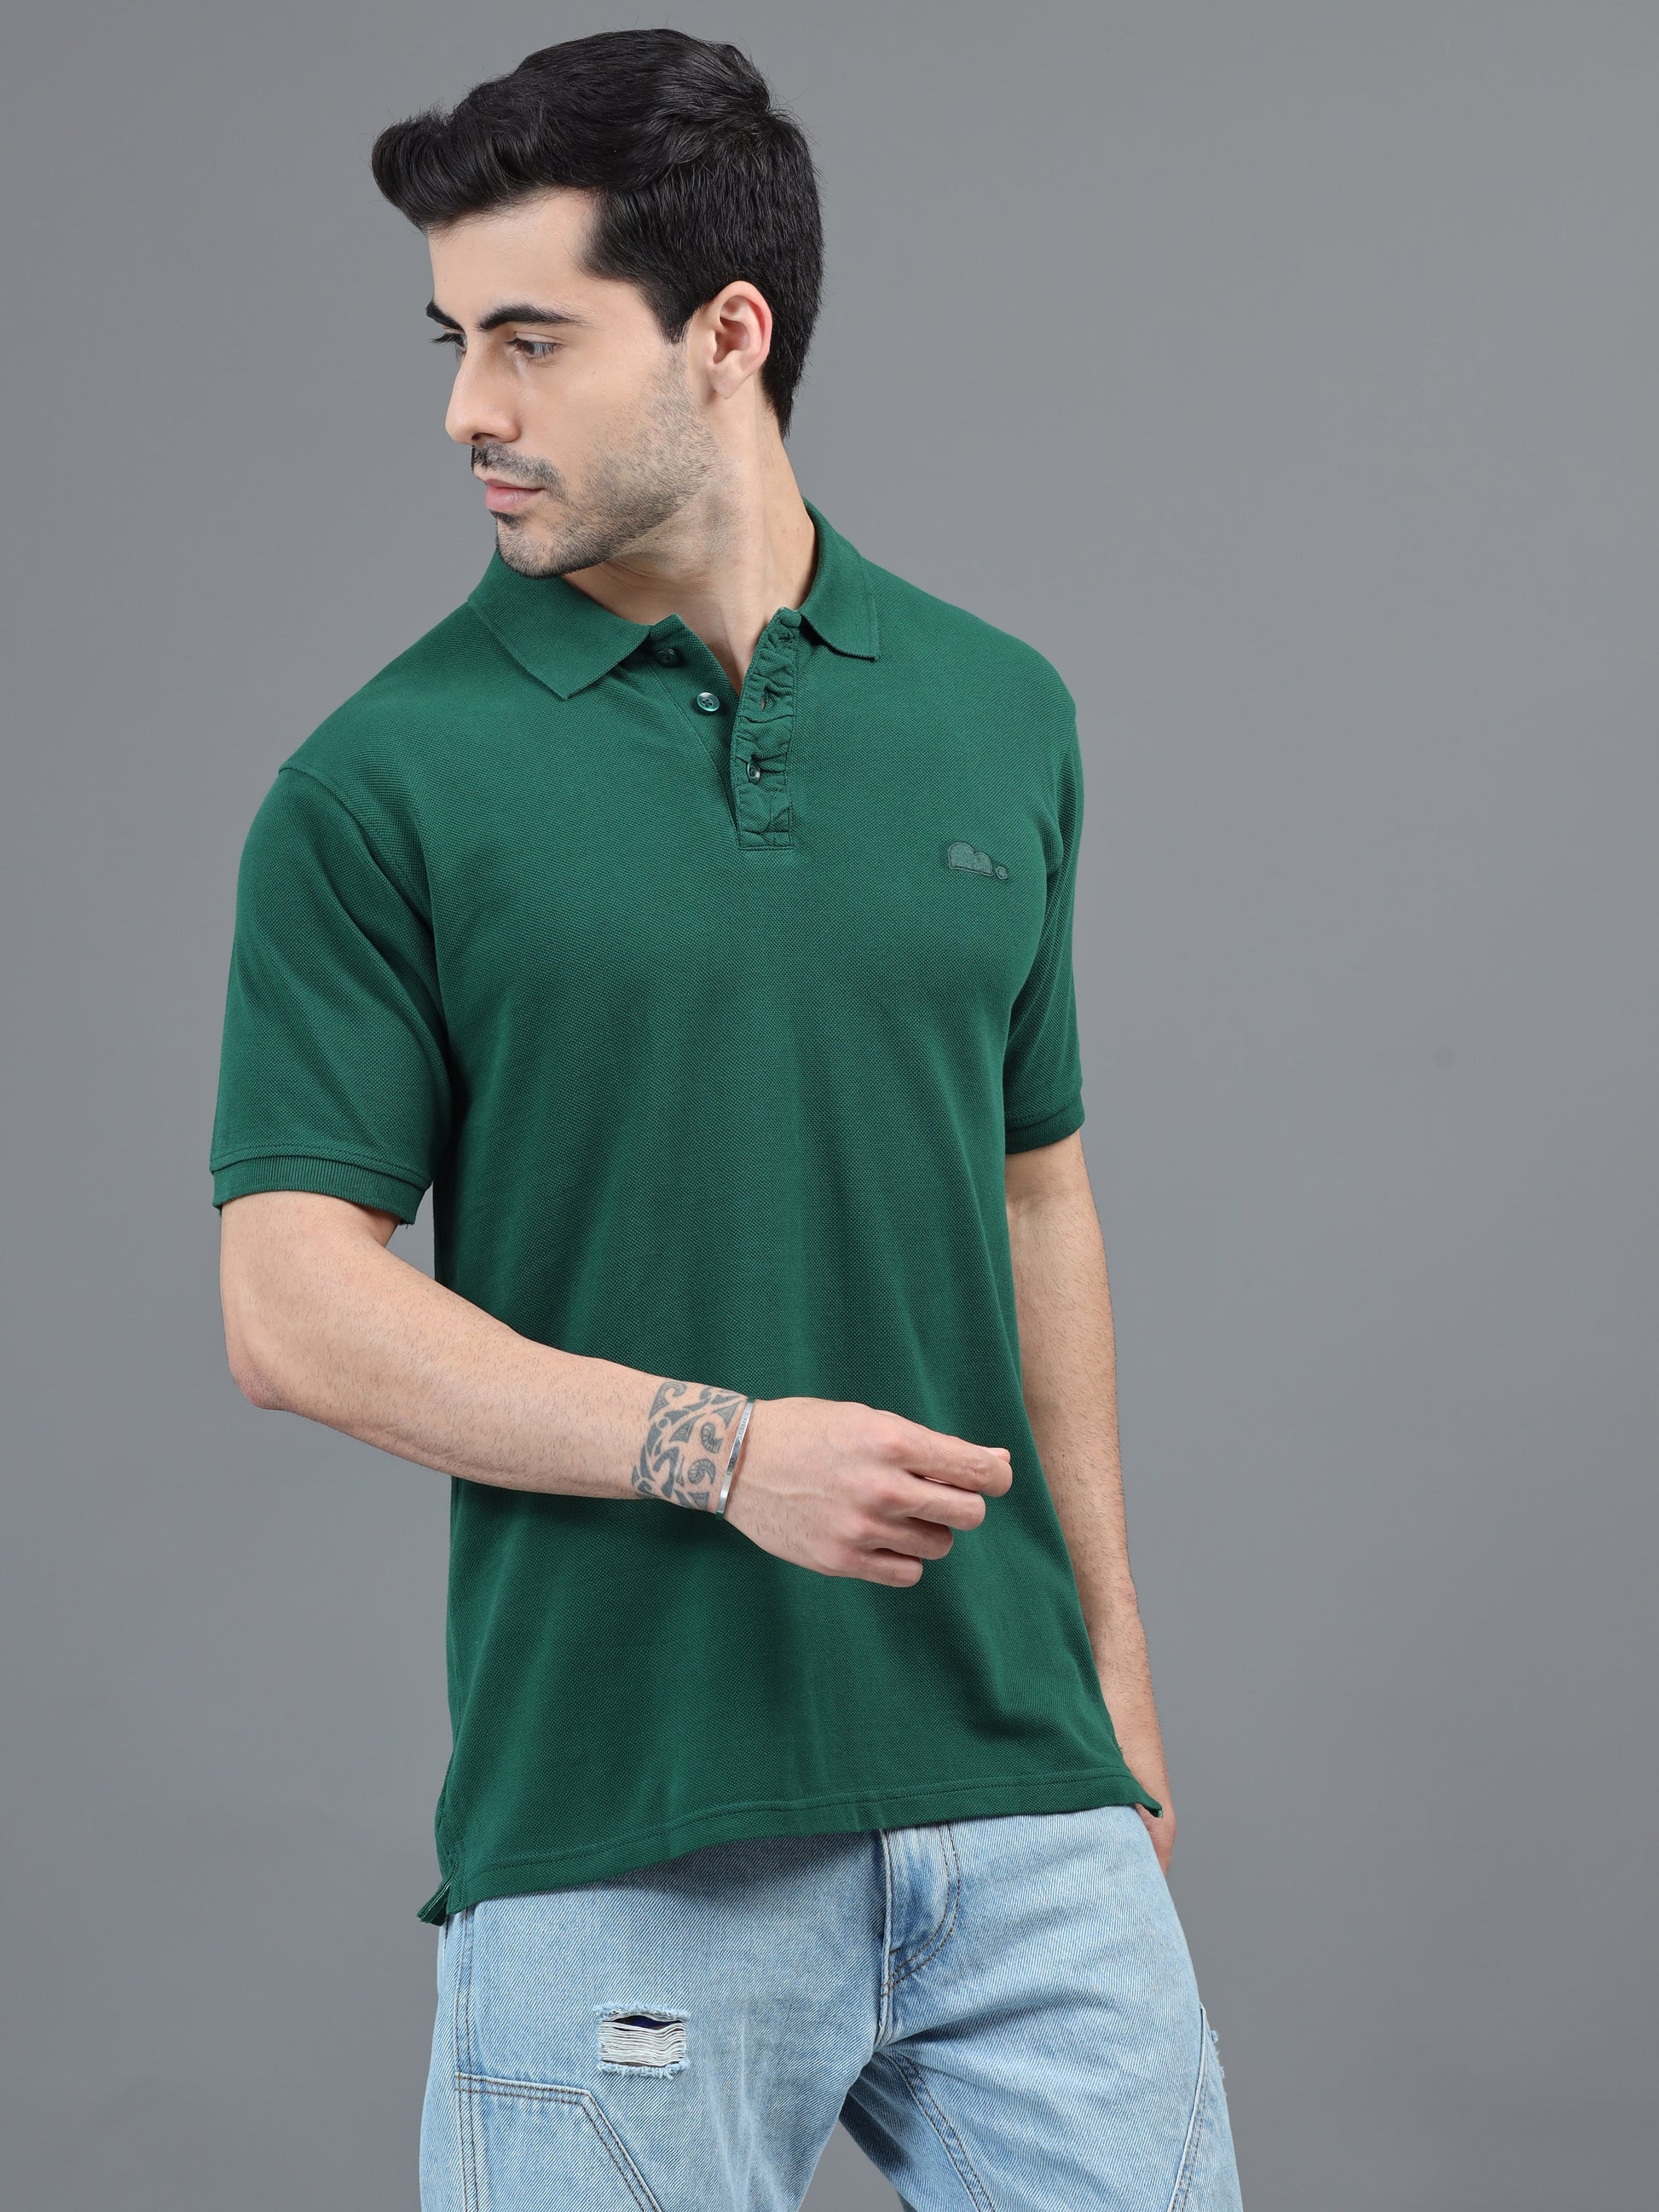 Green T Shirt for Men